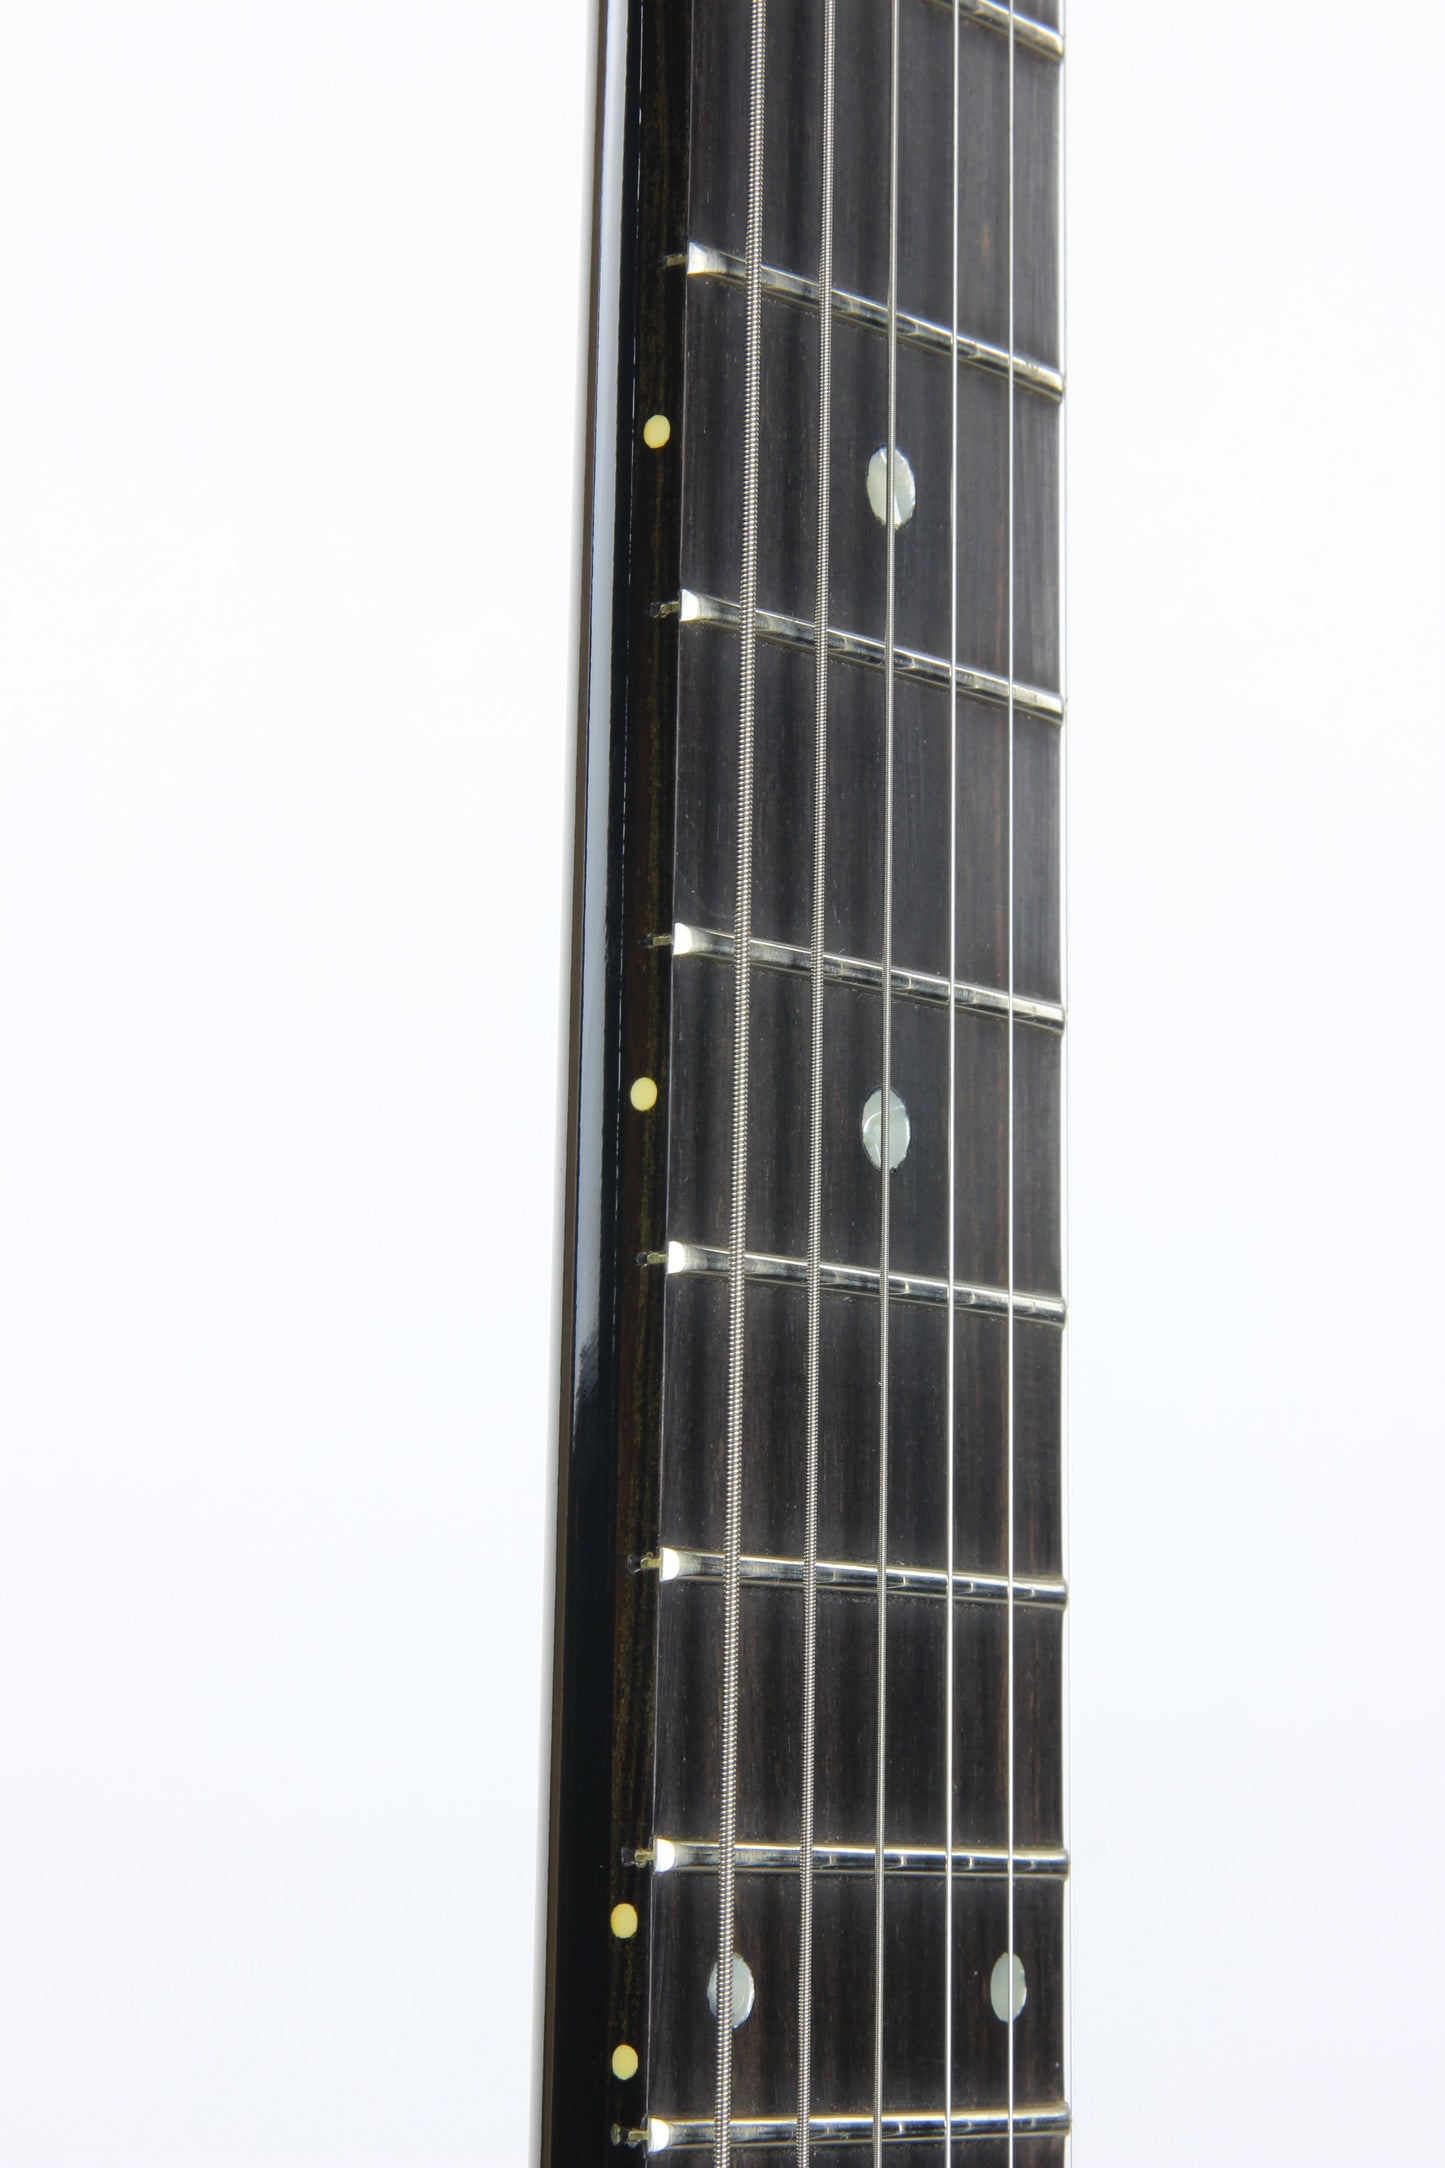 RARE 1987 Gibson U2 Floyd Rose Flying V Raised Logo US-1 - Black Neck-Through Super Strat